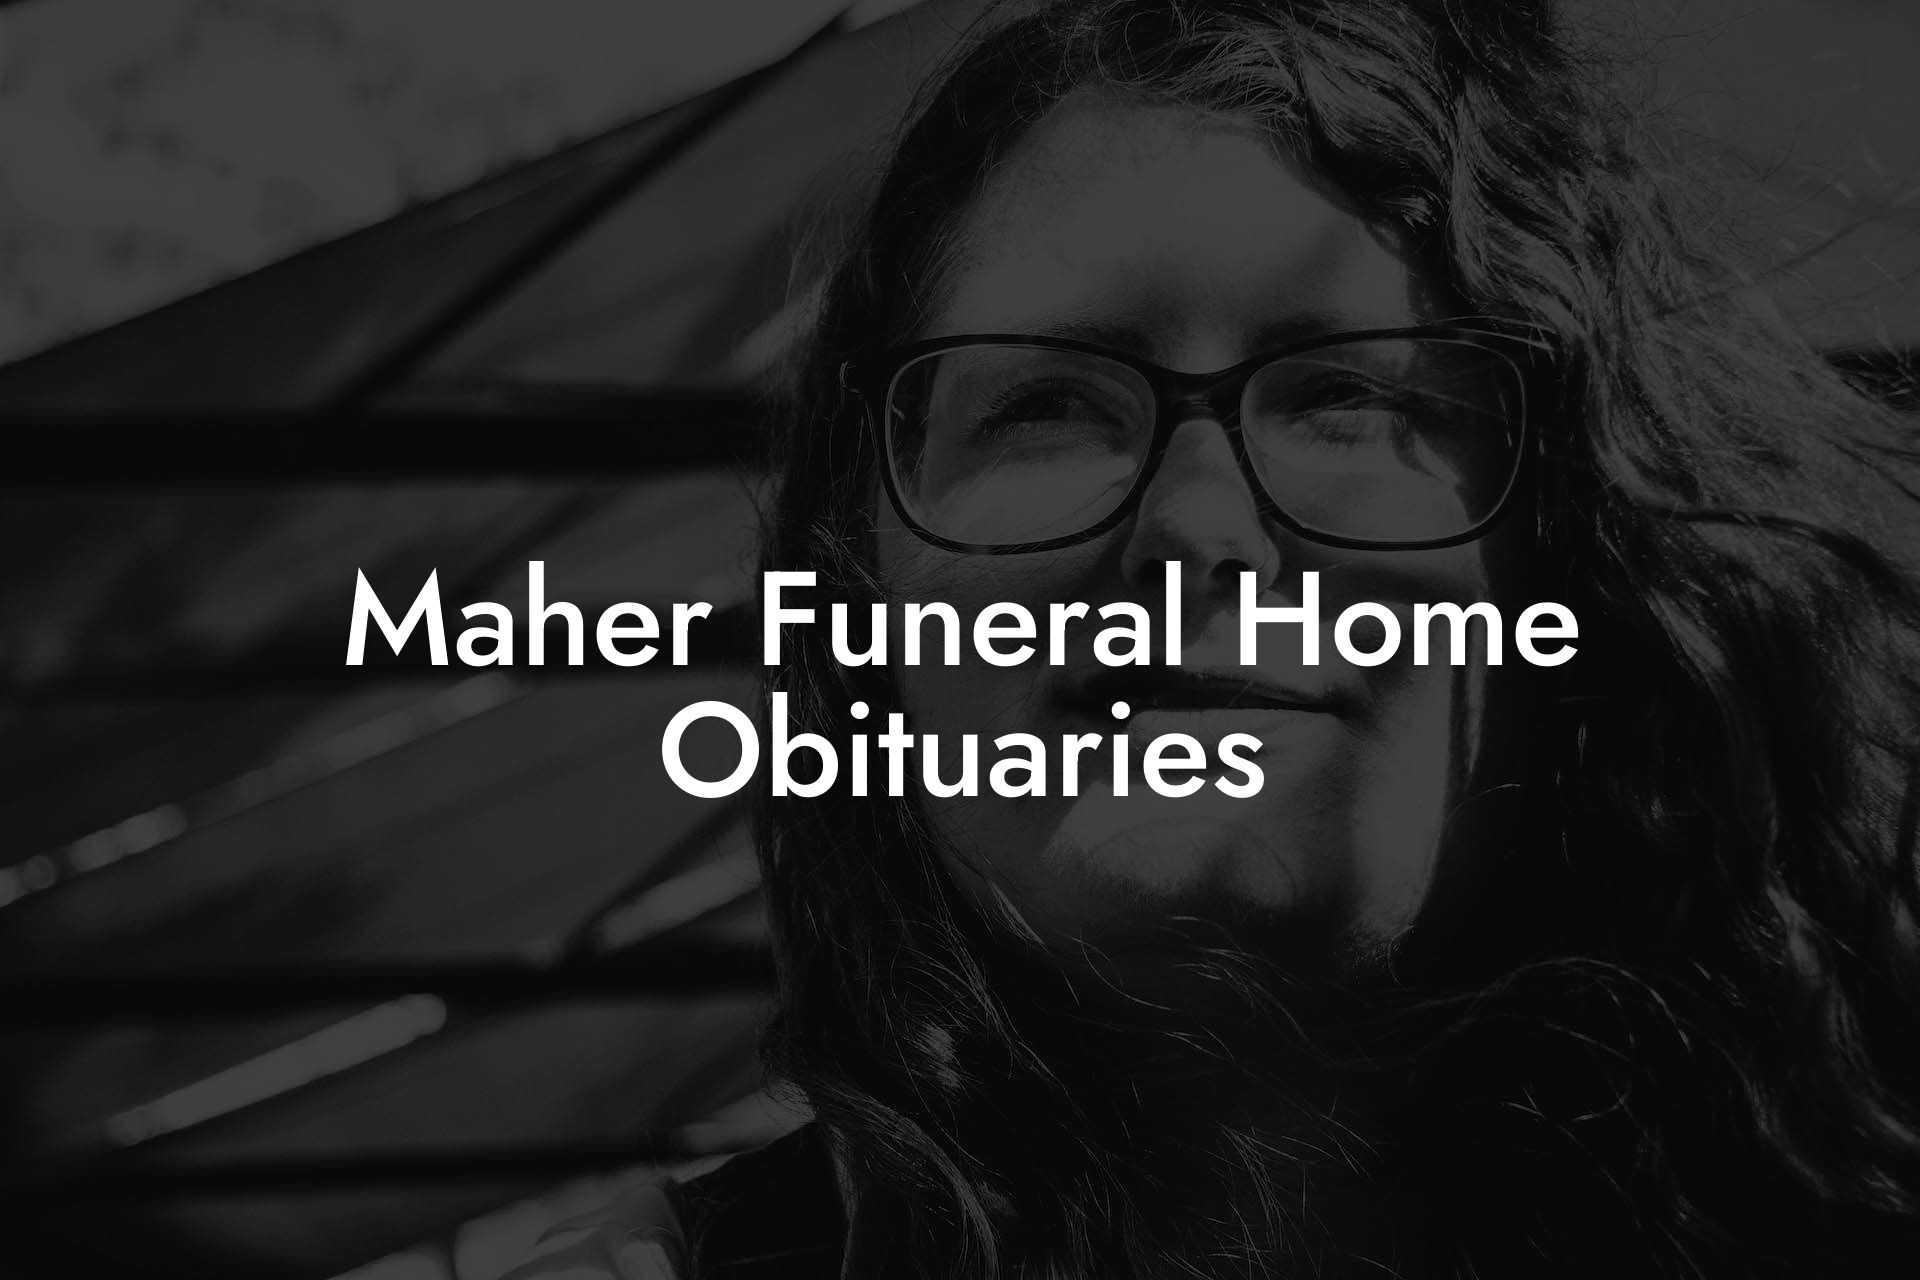 Maher Funeral Home Obituaries